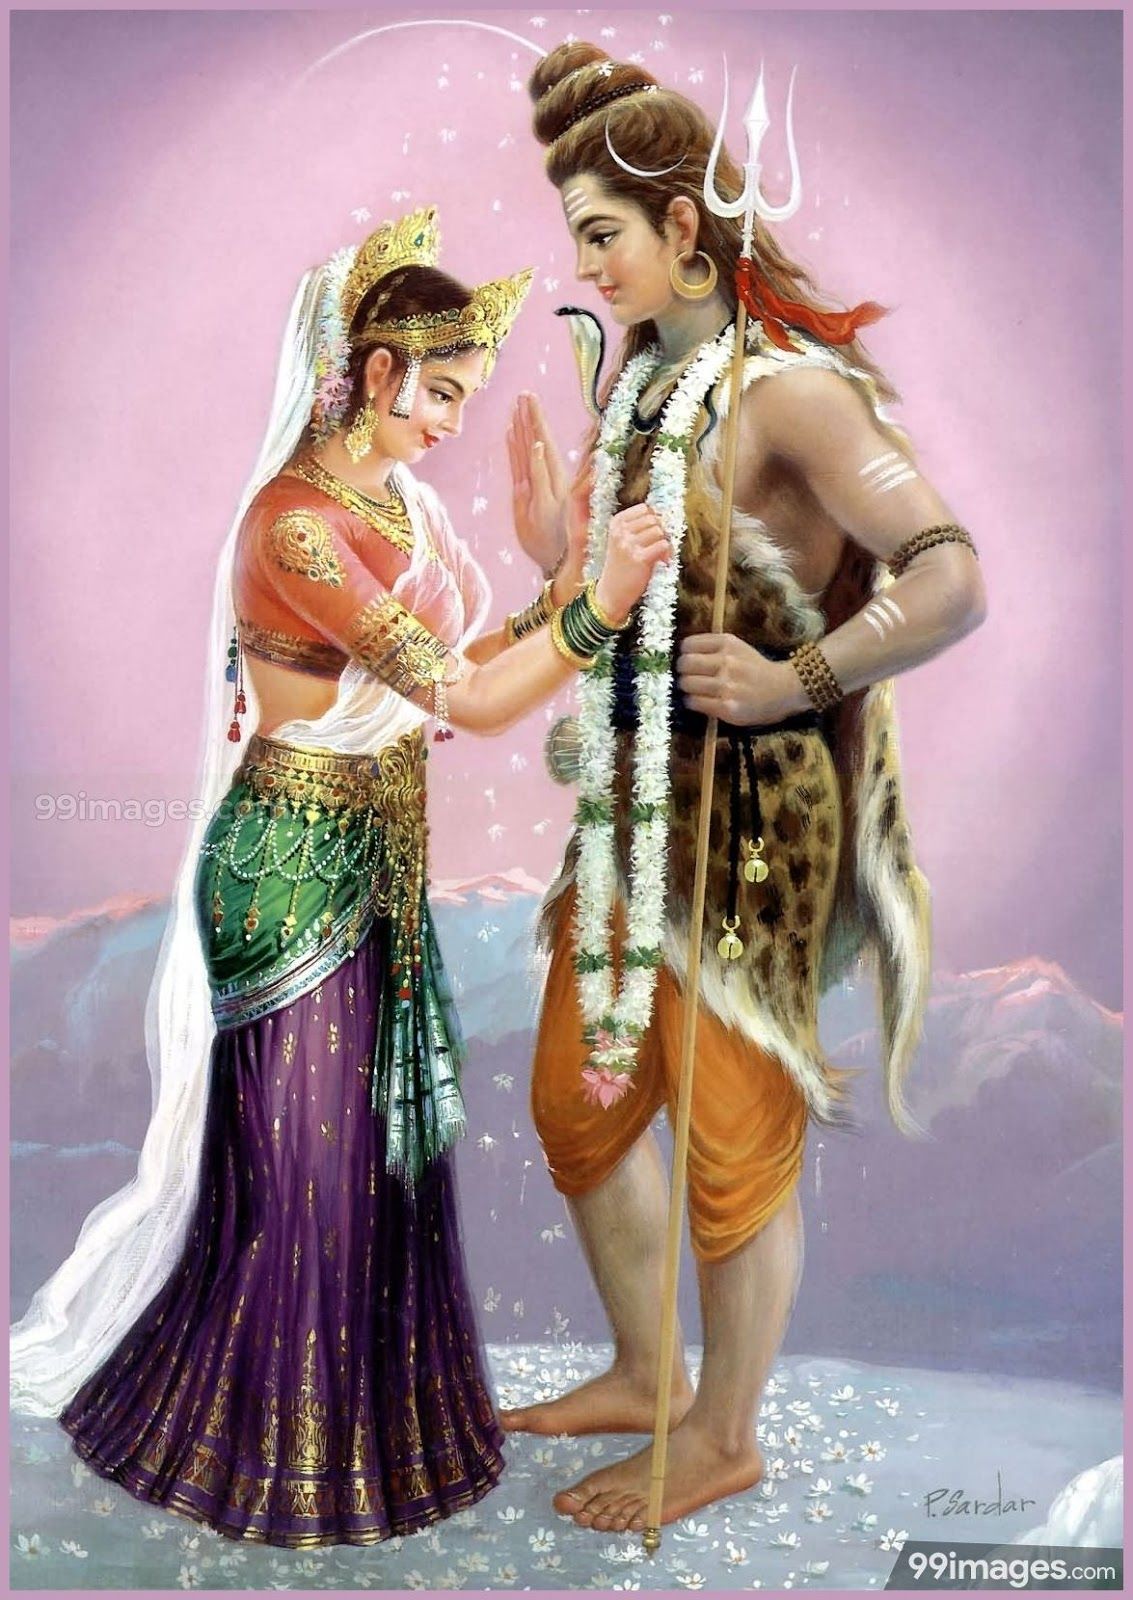 Shiva Parvati HD Image (2021) Love Marriage Pics Free Download. Happy New Year 2021